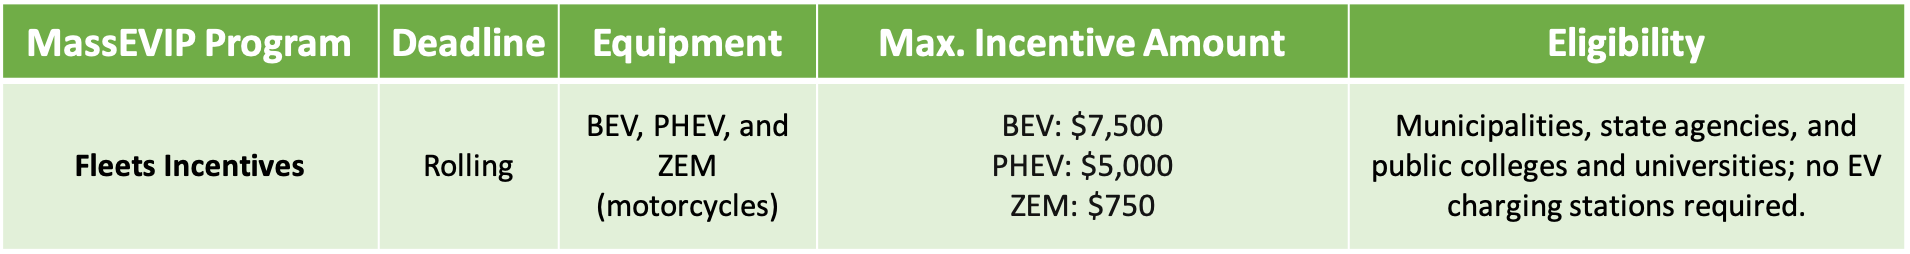 MassEVIP Fleets Incentive Program